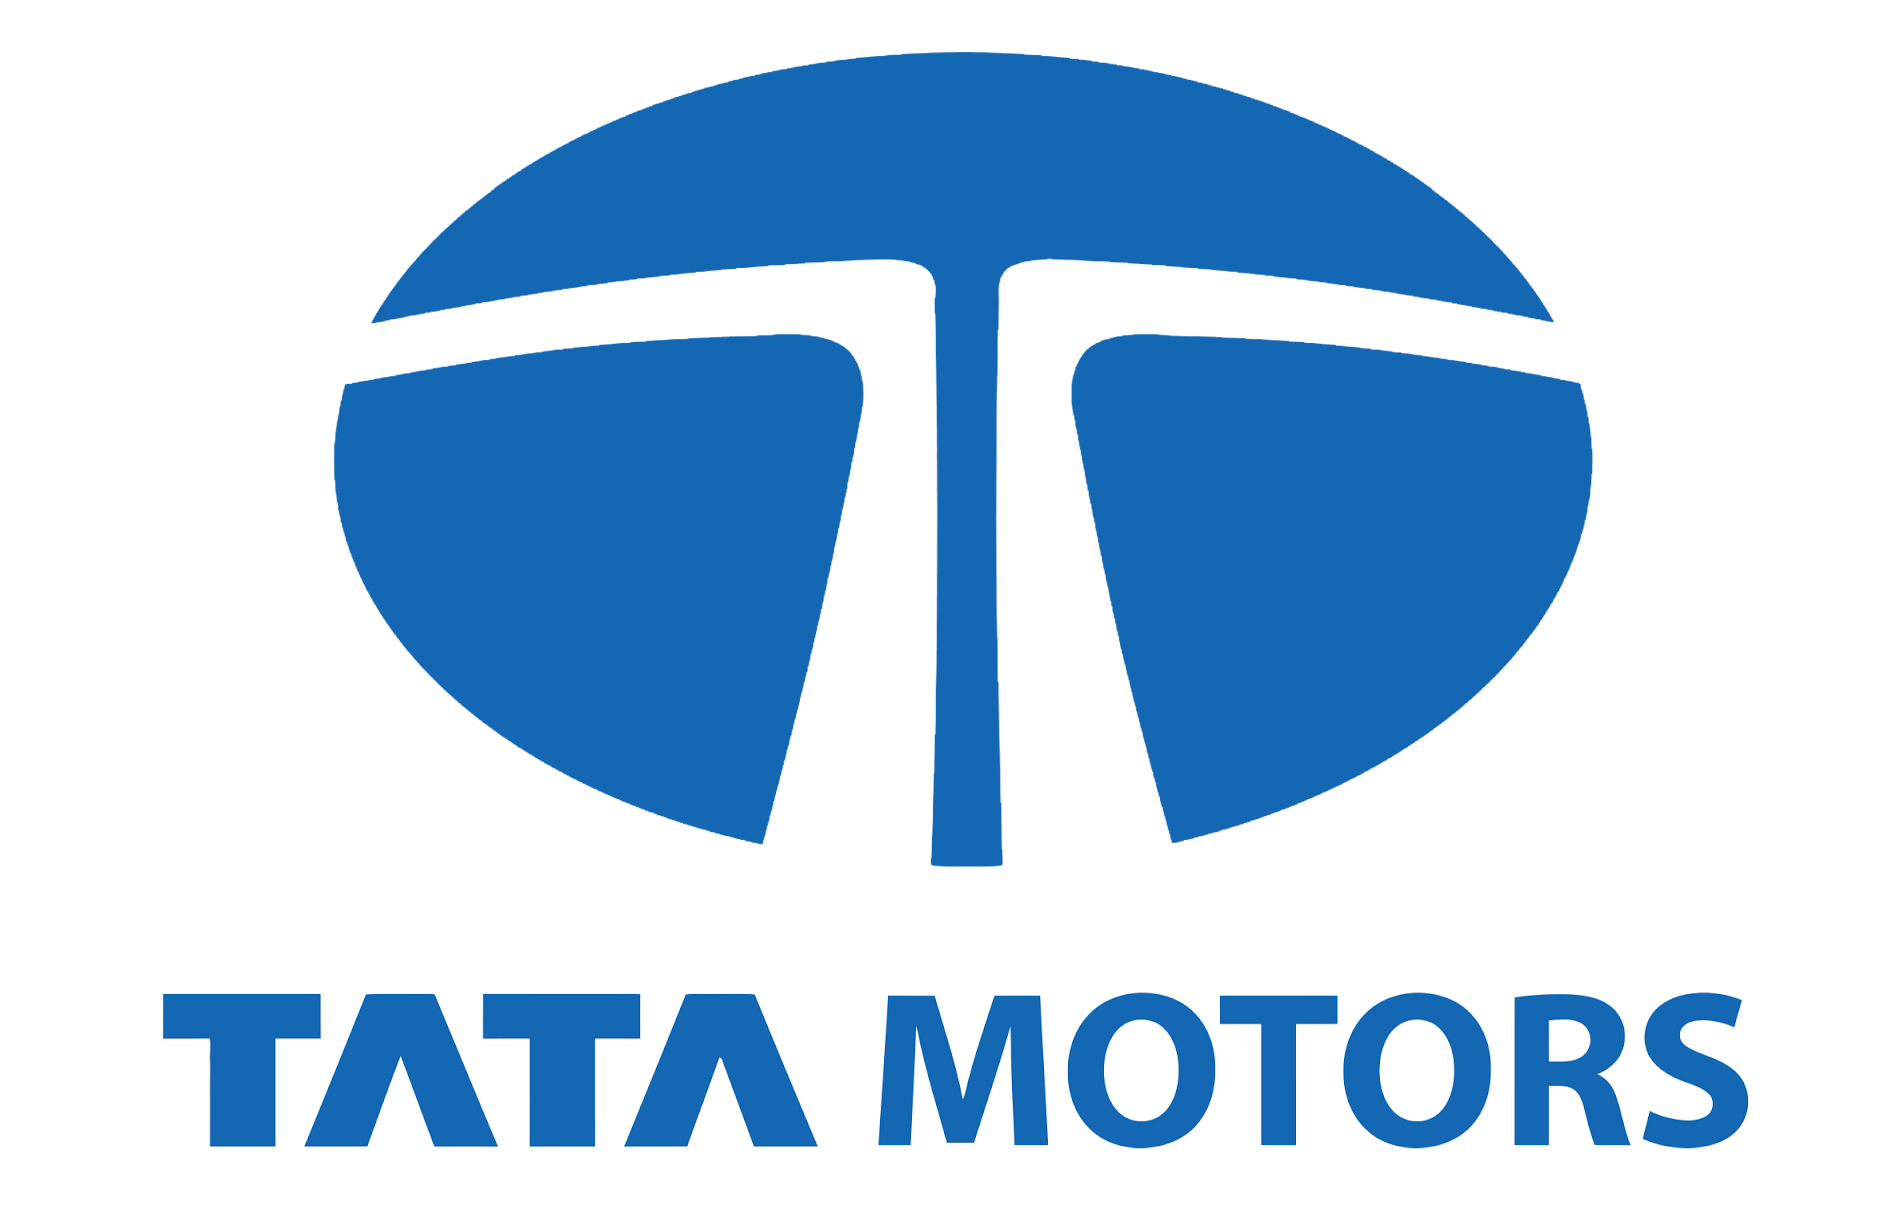 Tata Motors Cars Showroom - KVR Dream Vehicles Pvt Ltd Logo